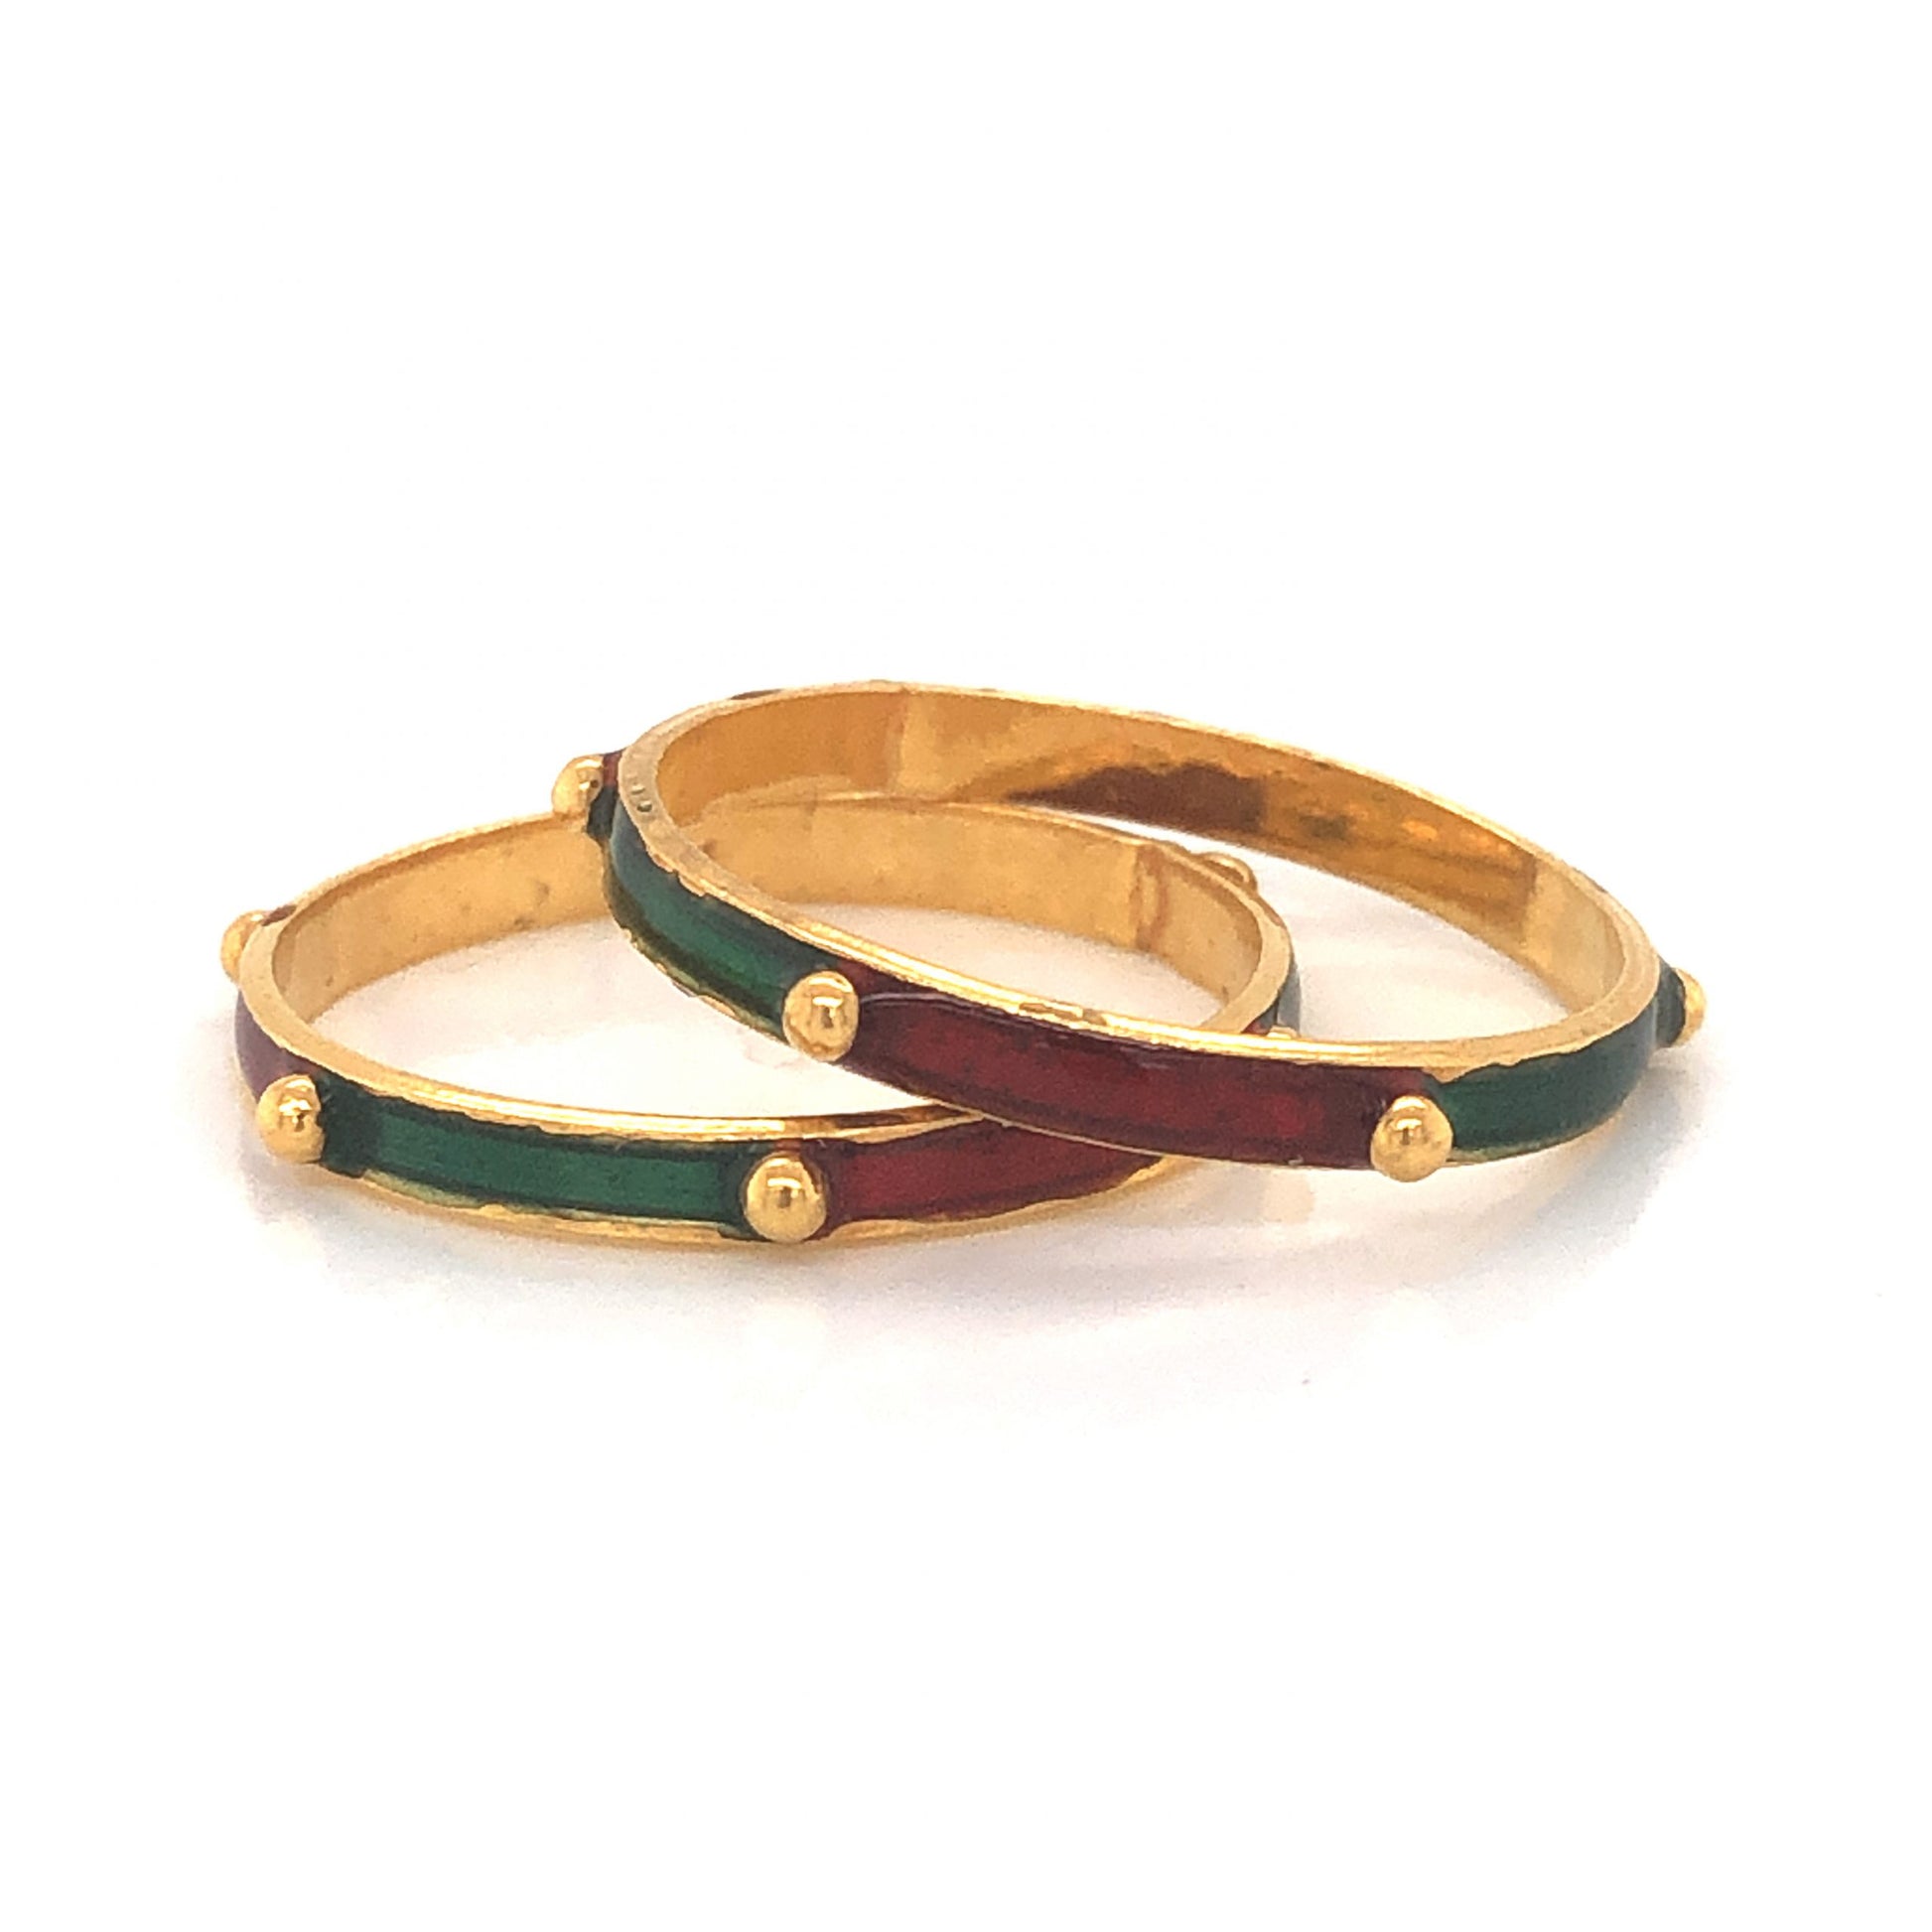 Green & Red Enamel Stacking Ring in 21k Yellow GoldComposition: 21 Karat Yellow GoldRing Size: 7.25Total Gram Weight: 1.3 g